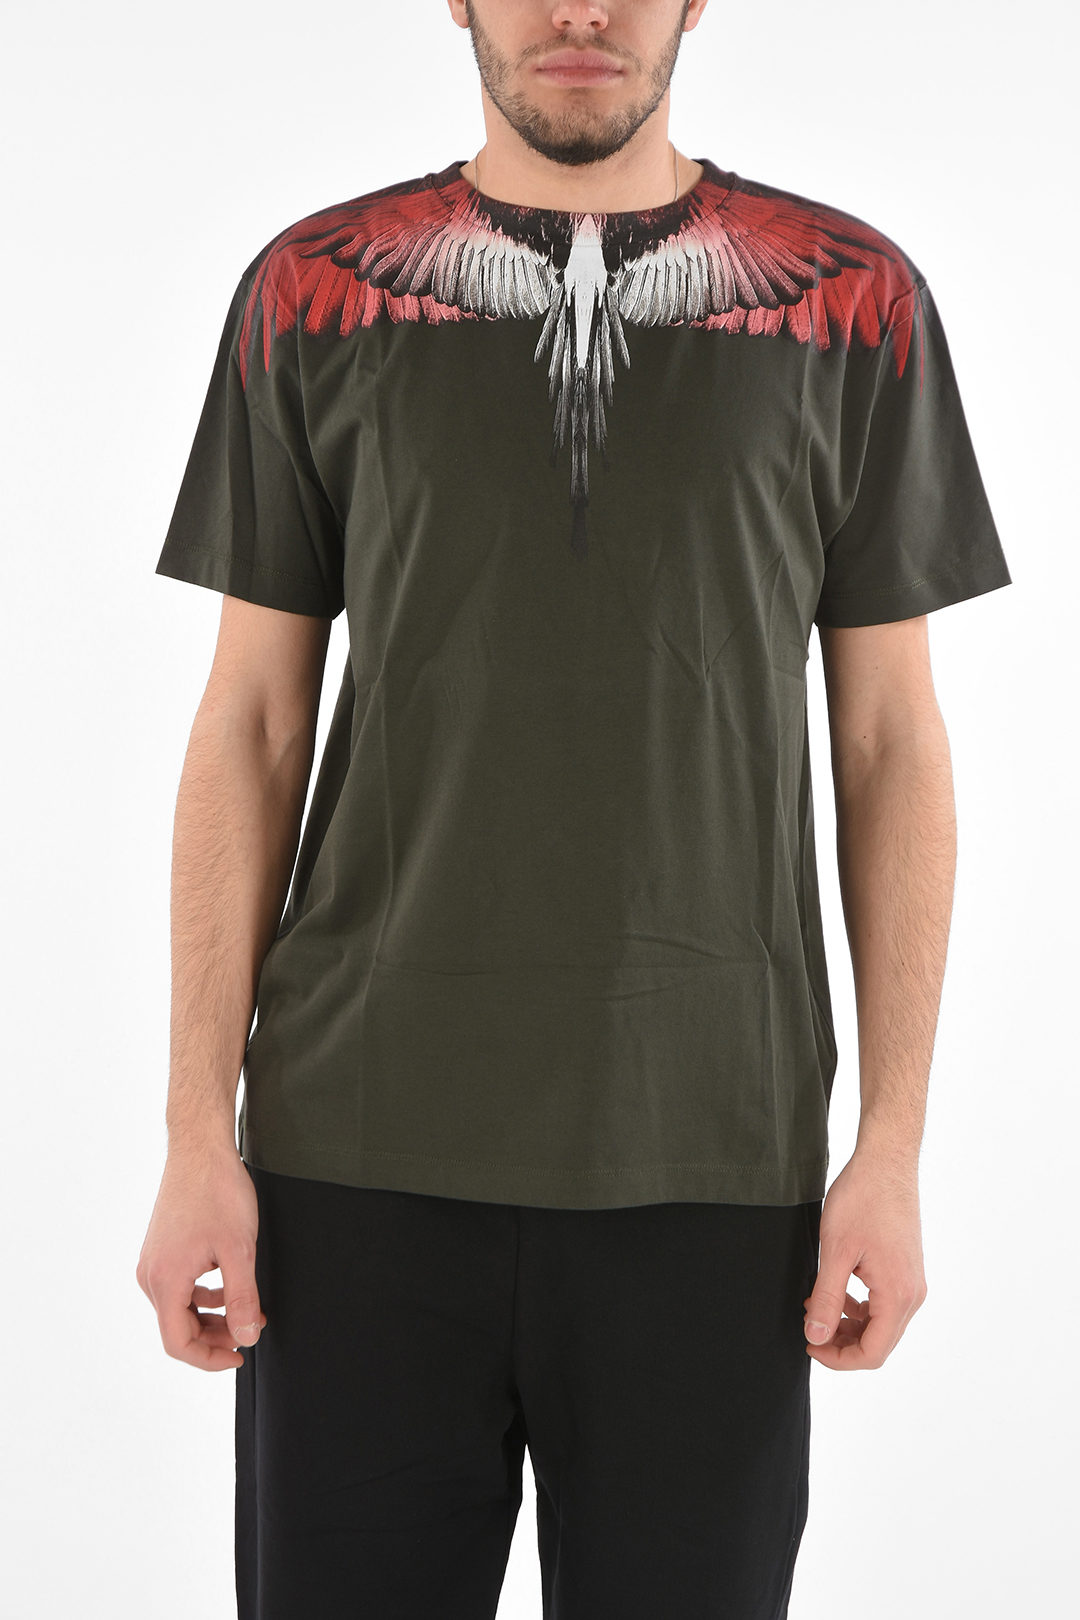 T-shirts Marcelo Burlon - Red Wings black T-shirt - CMAA018F190010961020